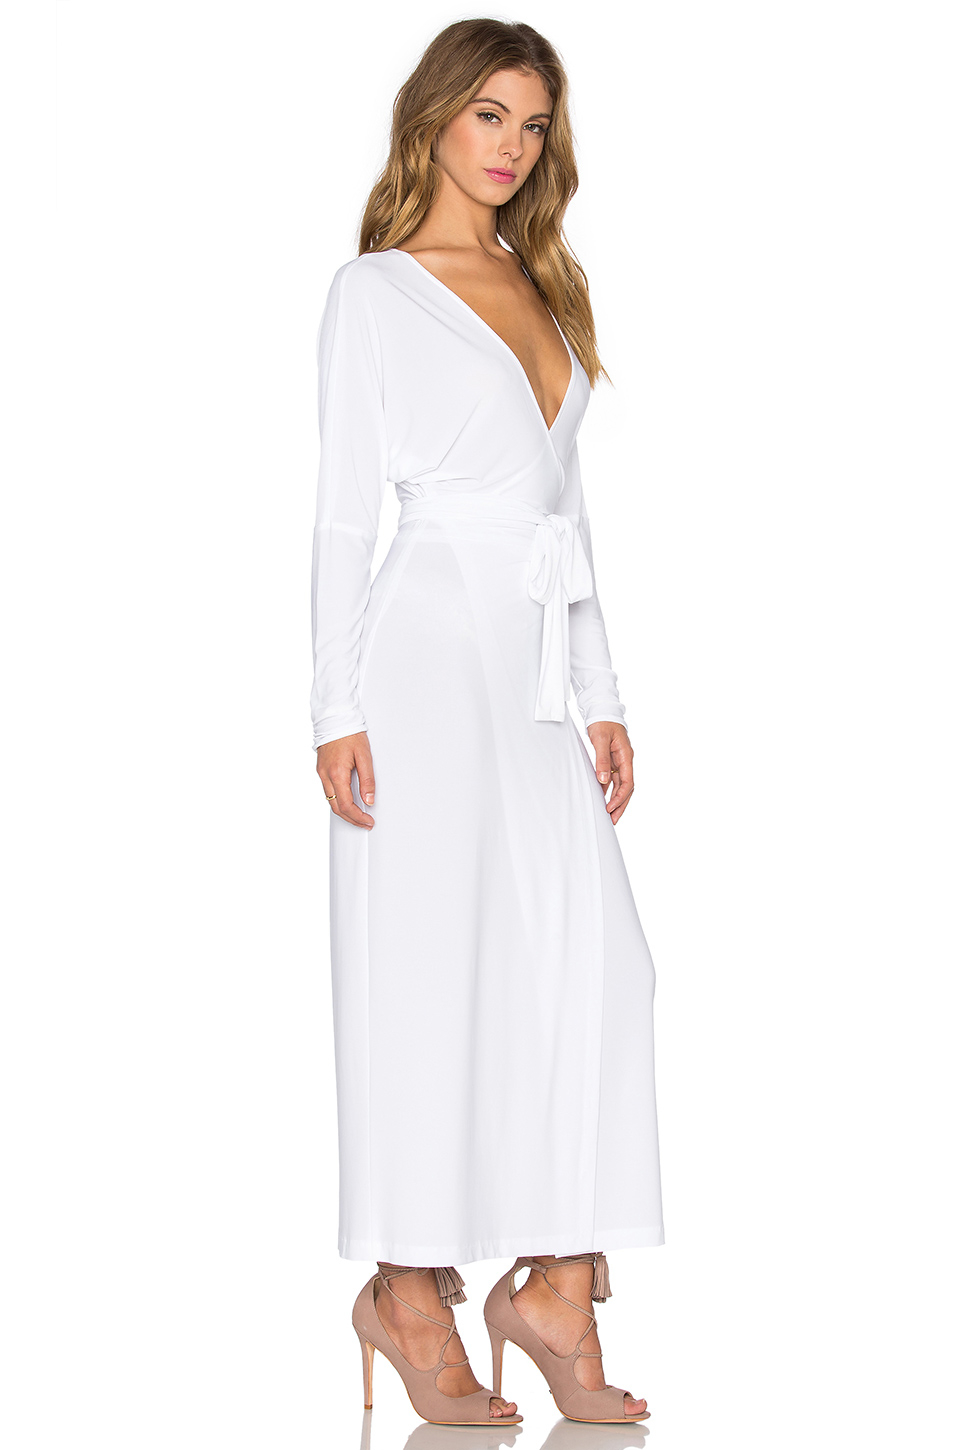 Norma Kamali Synthetic Dolman Wrap Midi Dress in White - Lyst